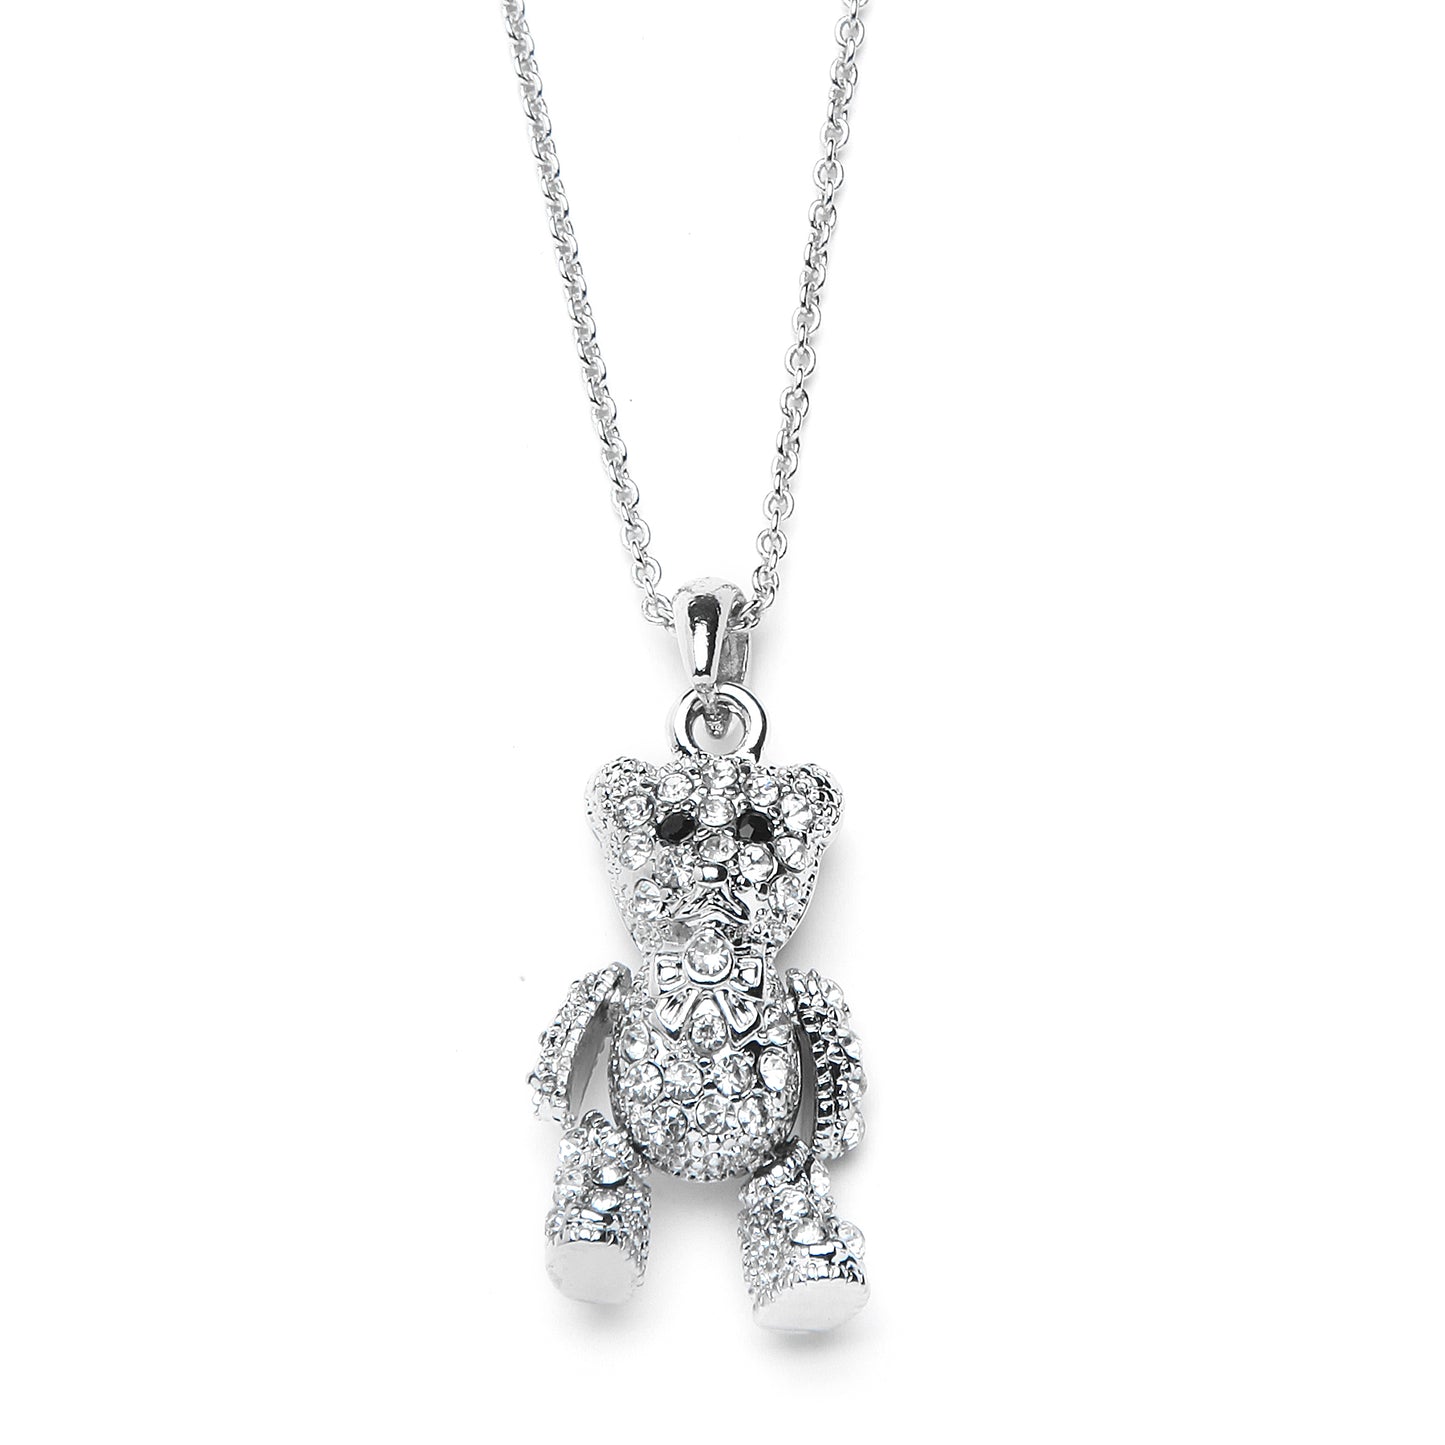 Teddy Bear Pendant Necklace with Premium CZ